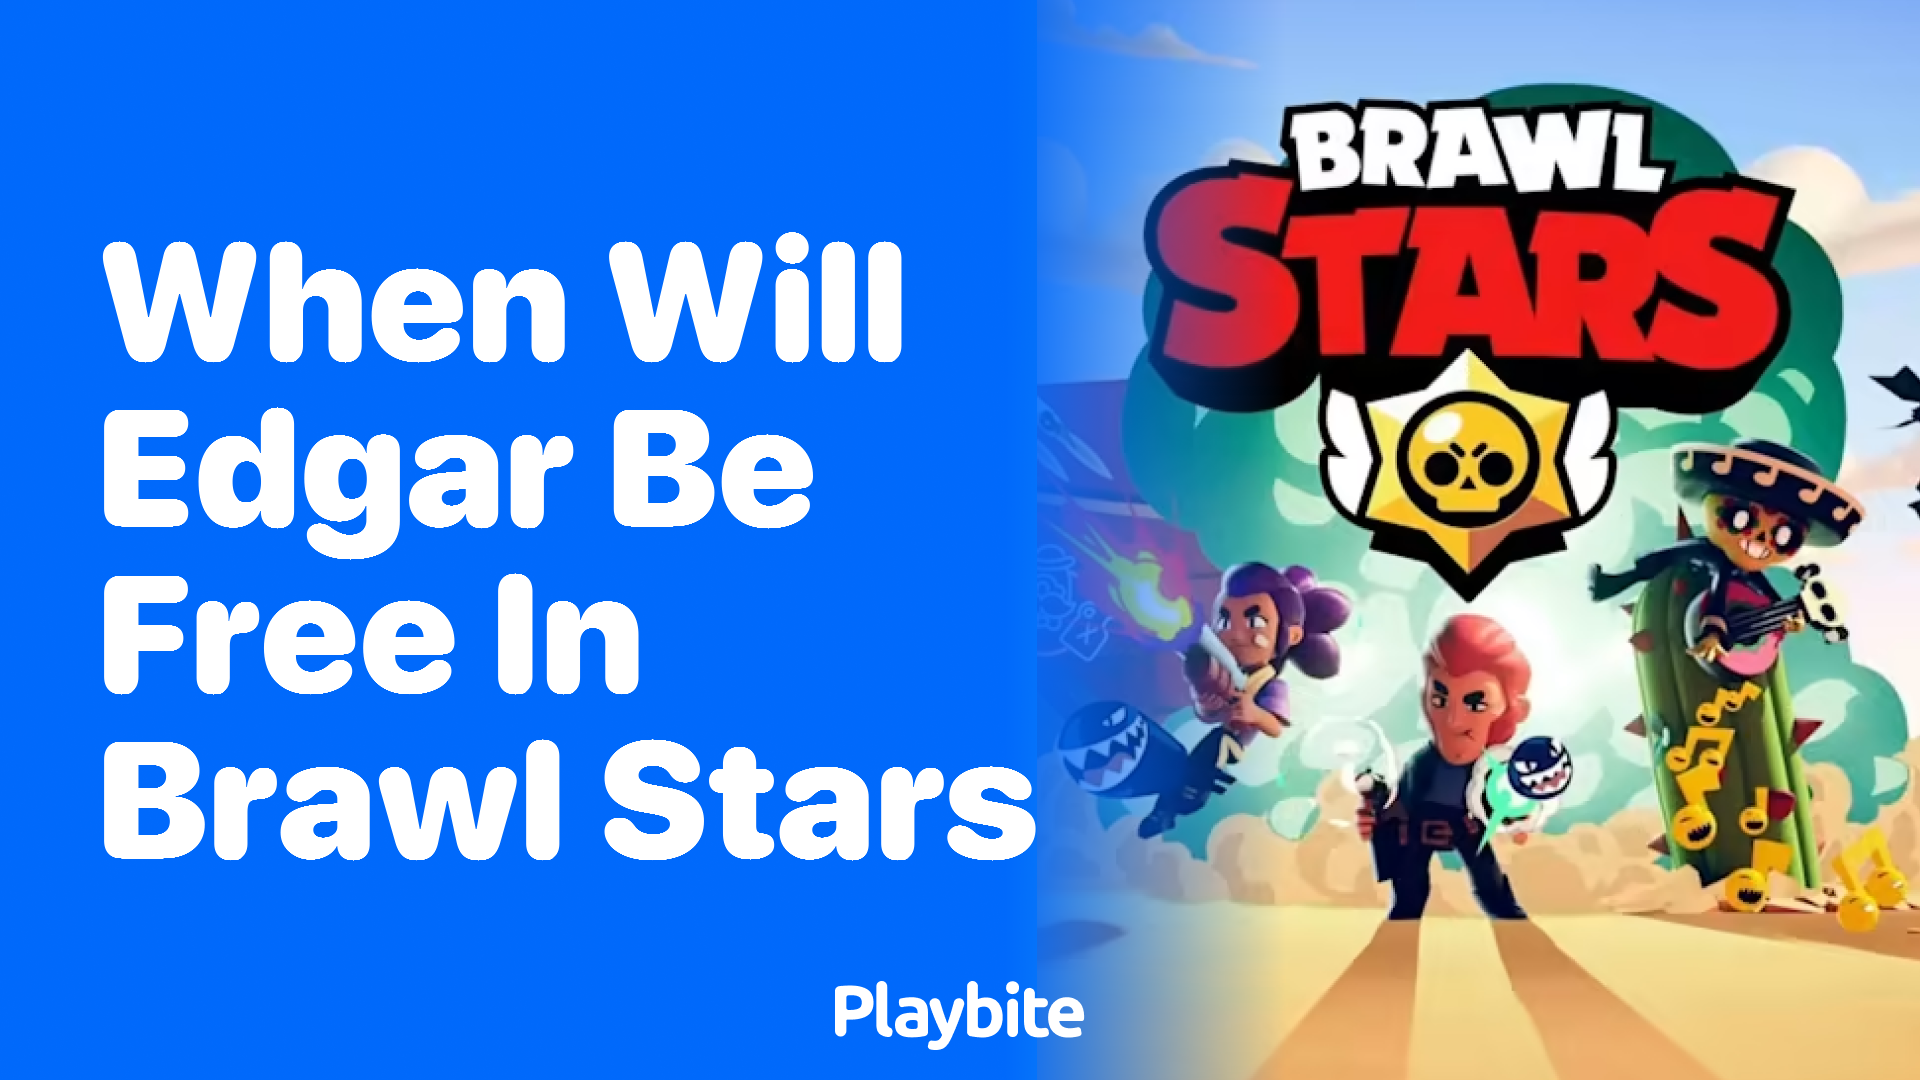 When Will Edgar Be Free in Brawl Stars? - Playbite